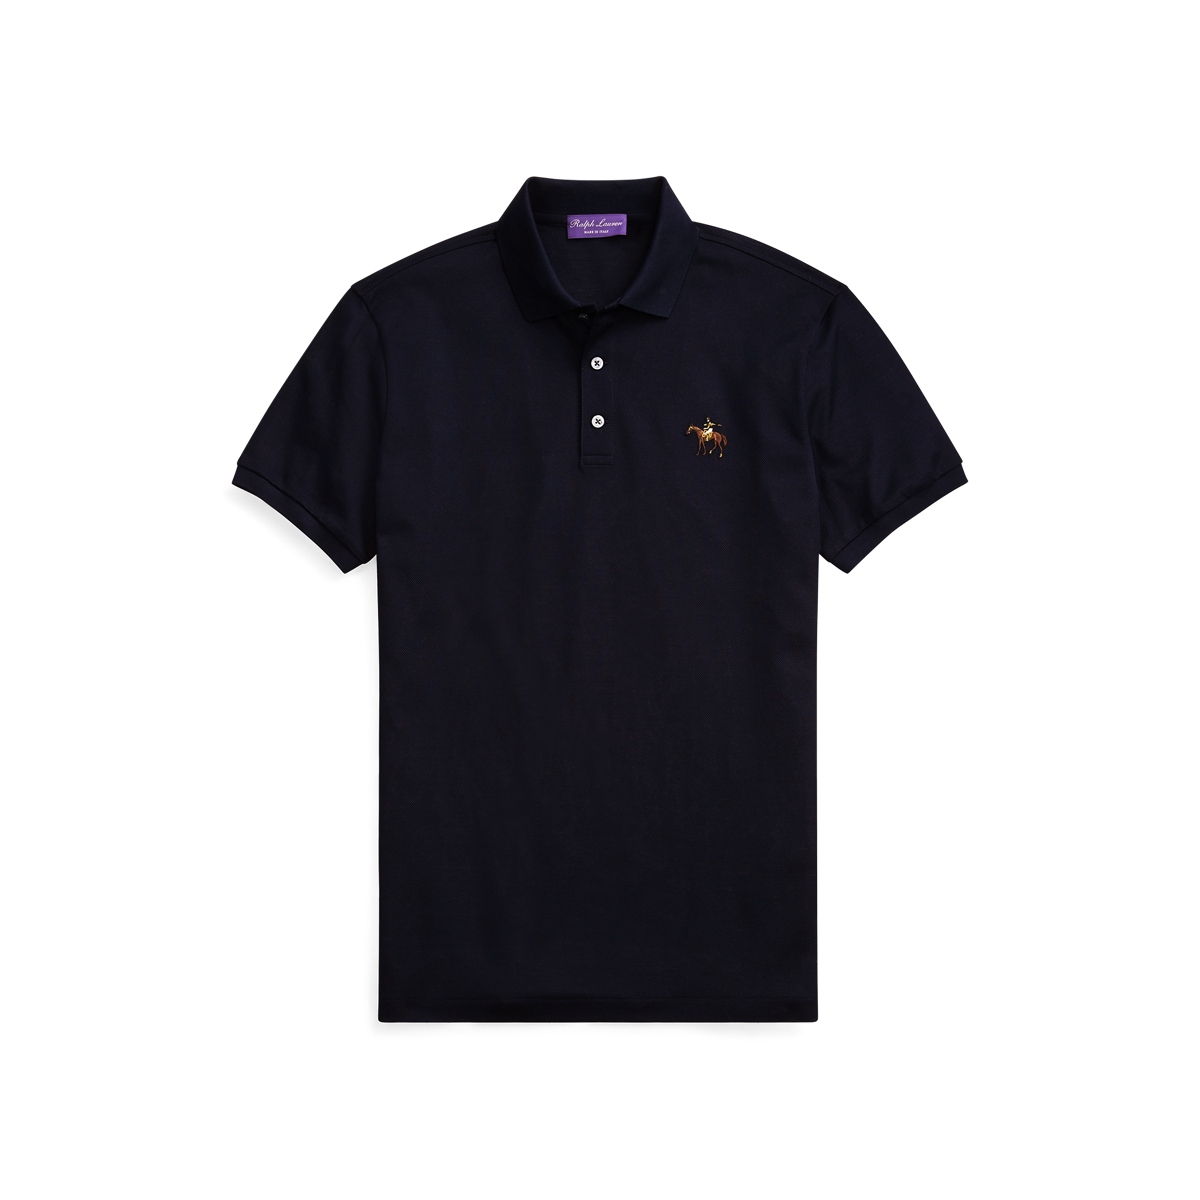 Top 83+ imagen black and purple ralph lauren polo shirt - Thptnganamst ...